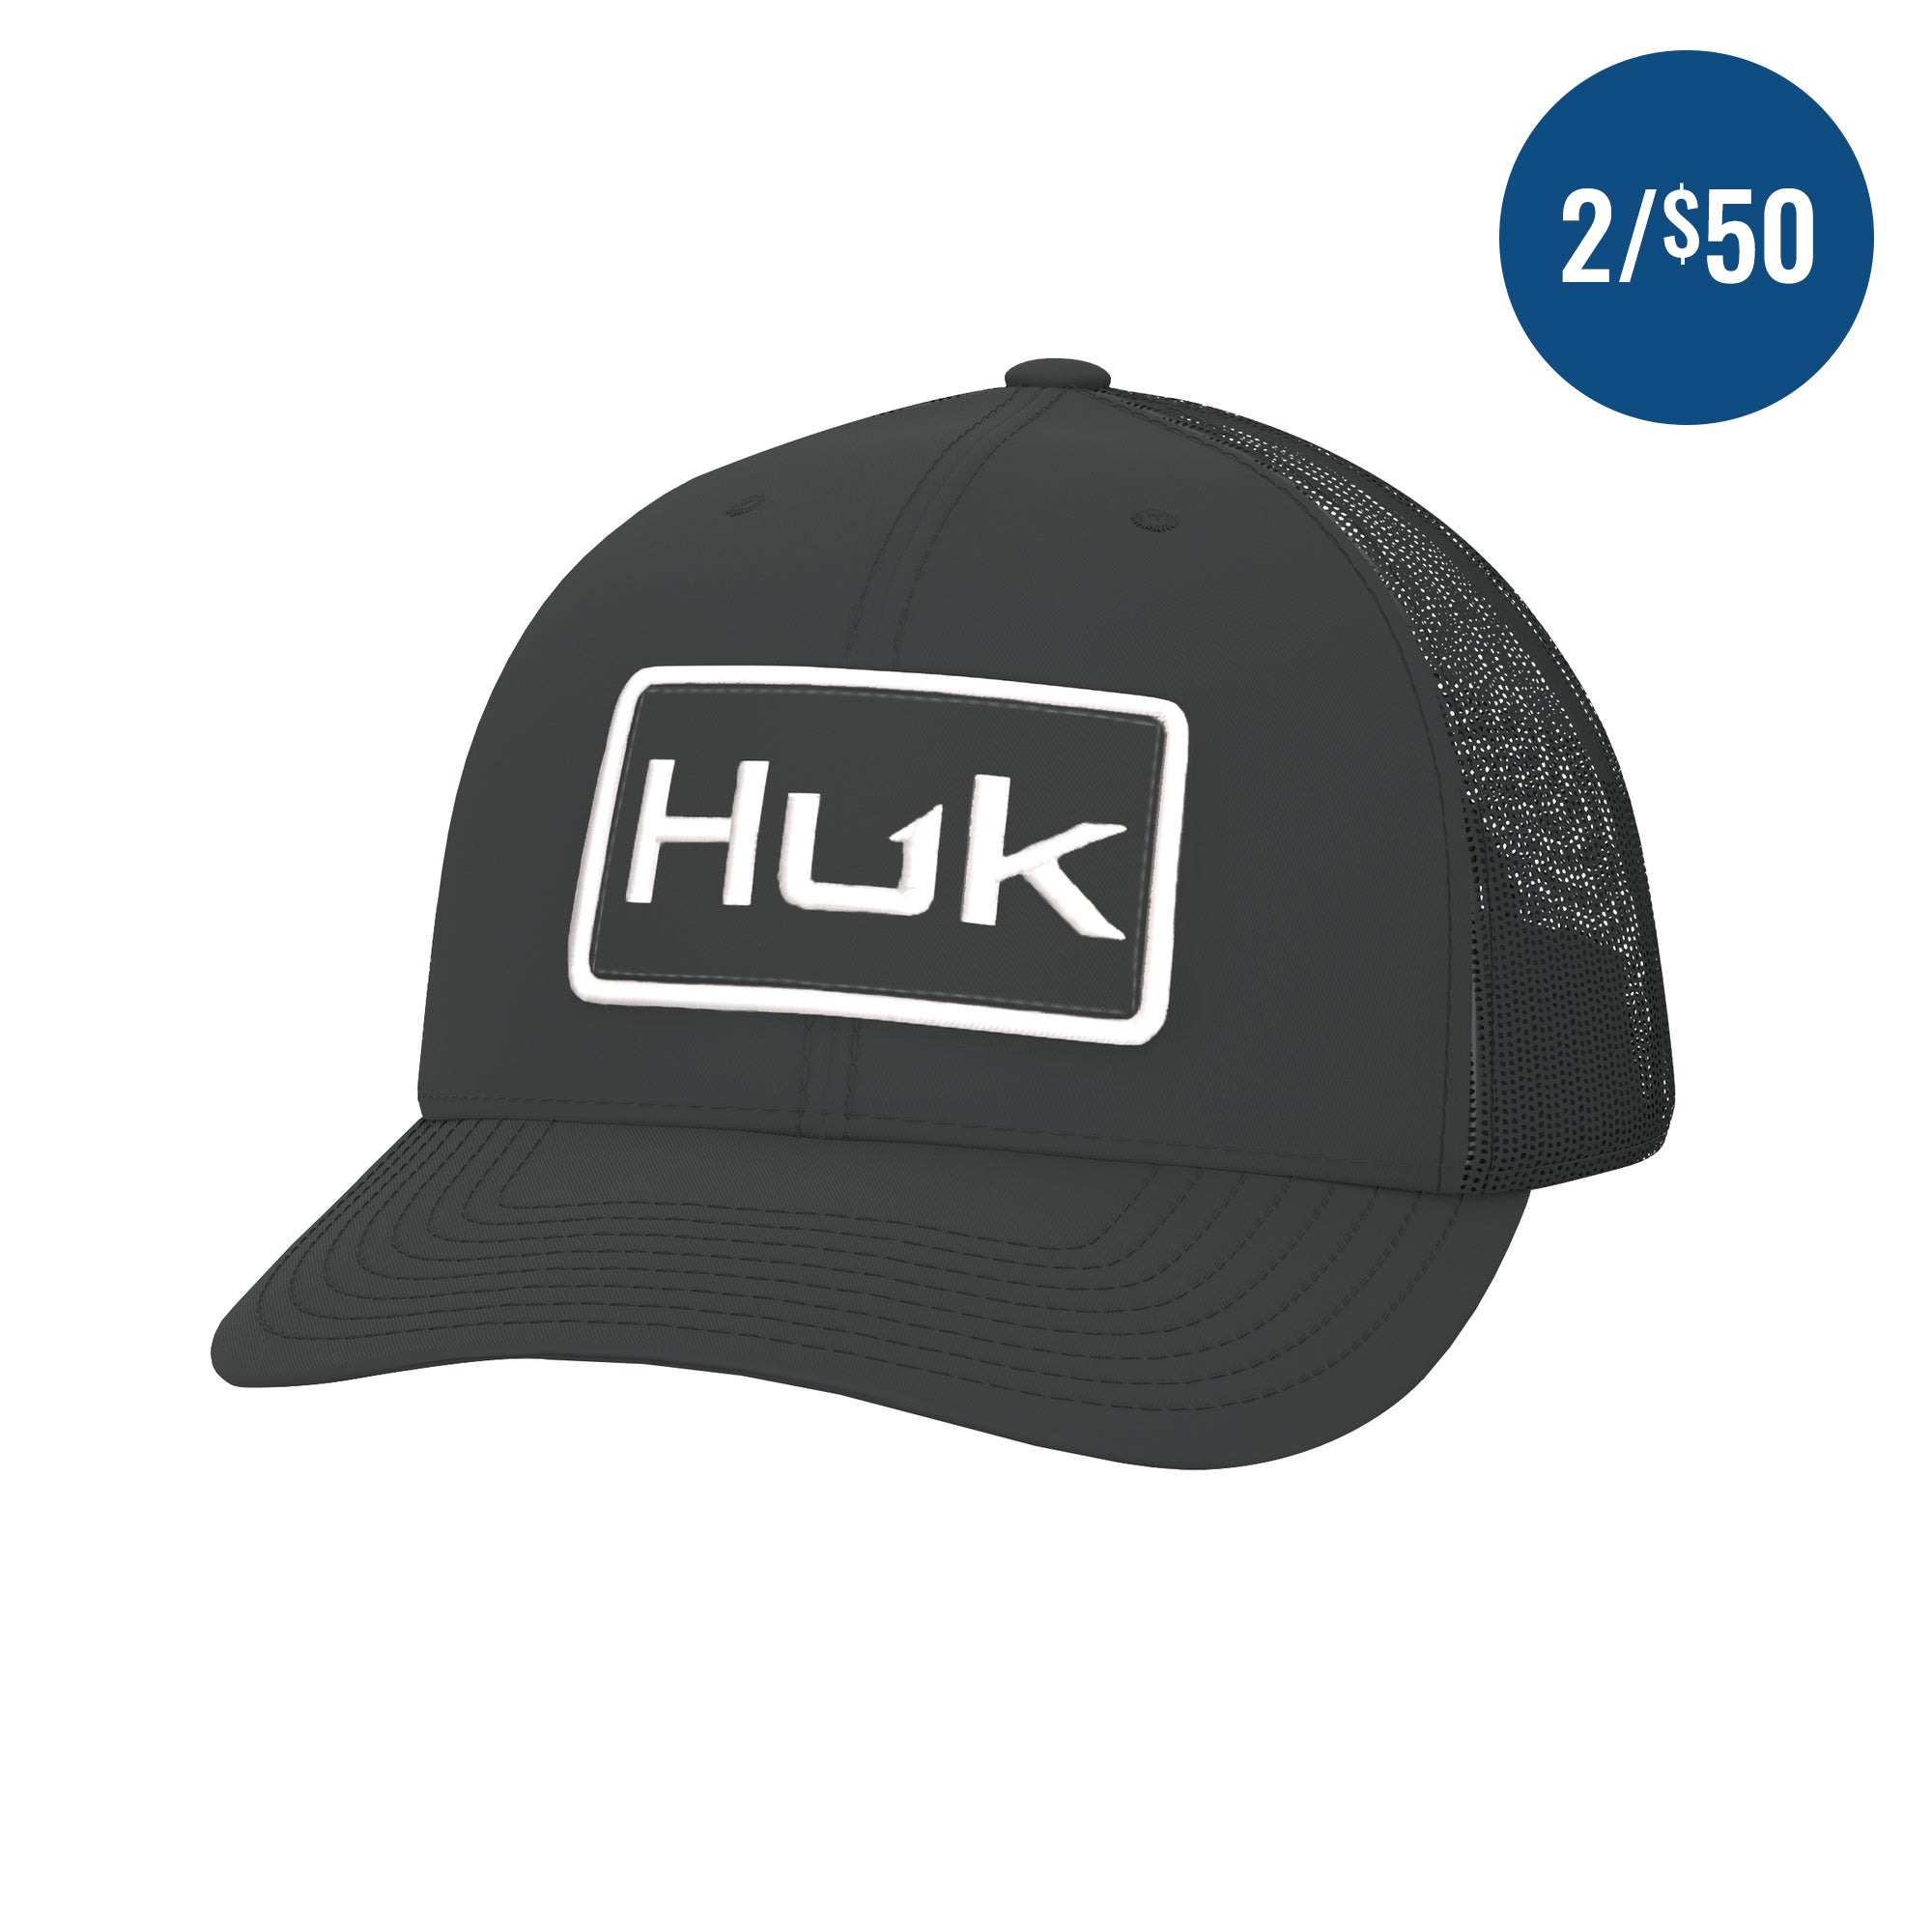 Huk Men's Huk'd Up Trucker Hat, Harbor Mist